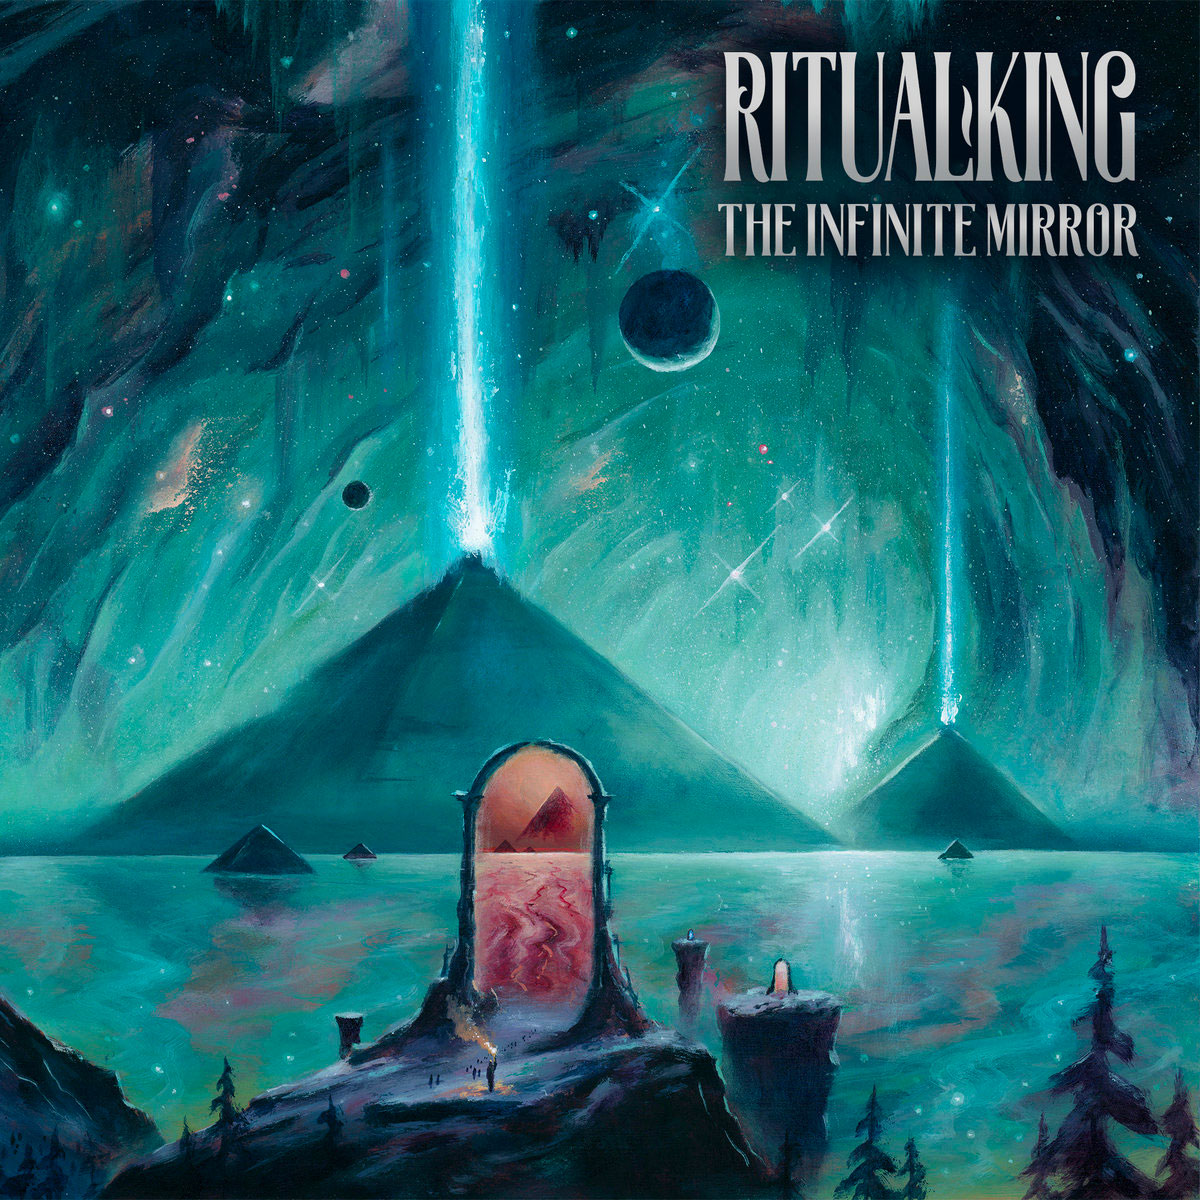 The Infinite Mirror by Ritual King